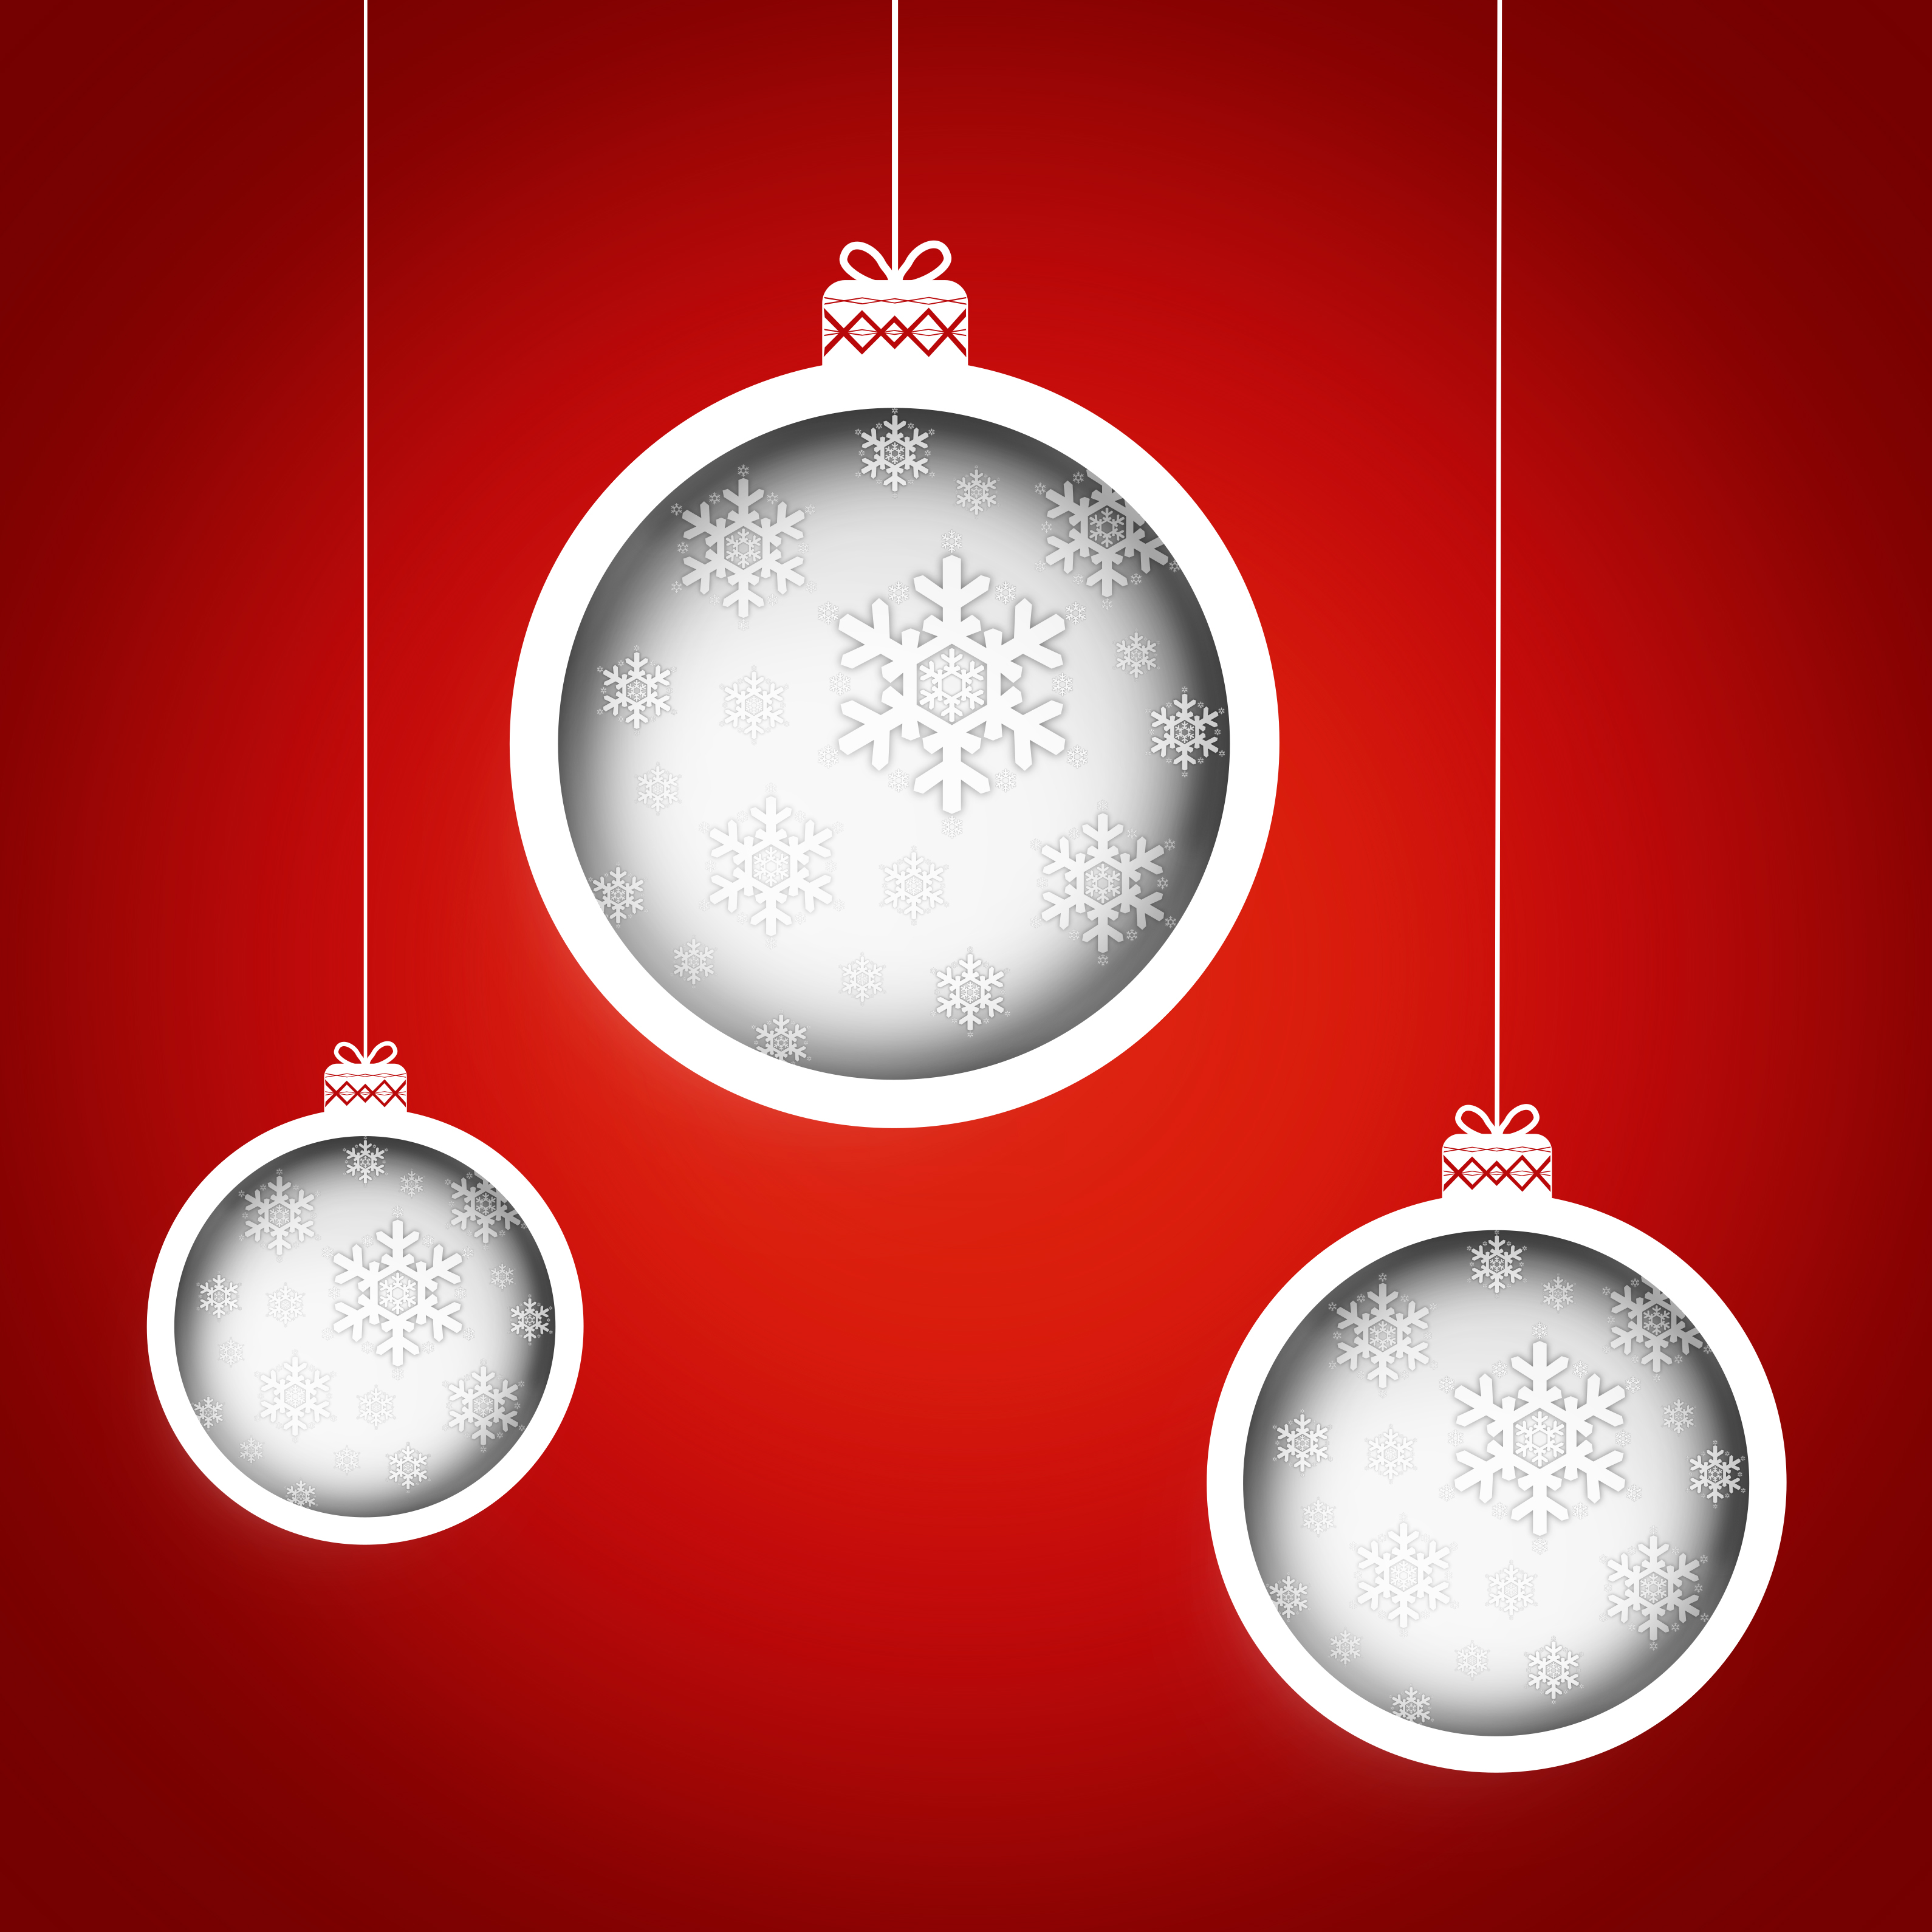 Christmas balls with delicate snowflakes - Happy Xmas, Abstract, Pine, Seasonal, Season, HQ Photo